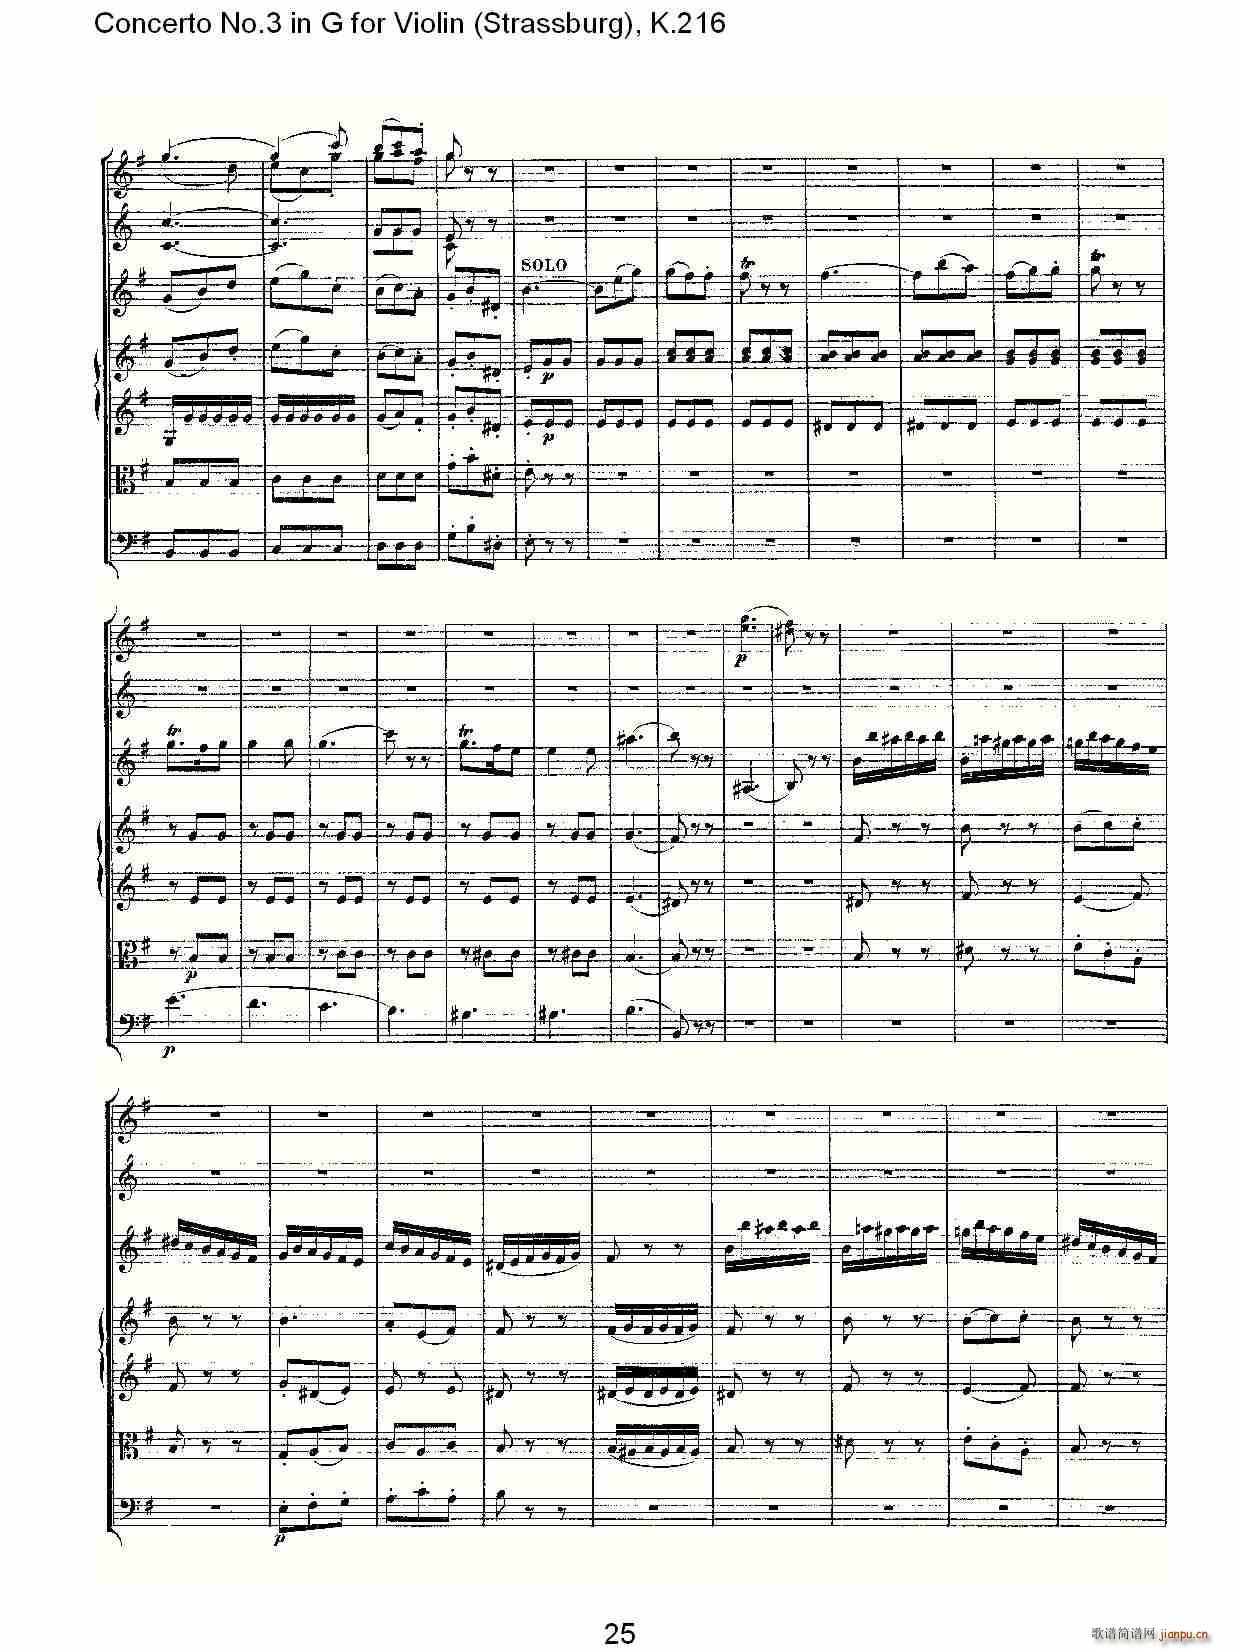 Concerto No.3 in G for Violin K.216(С)25